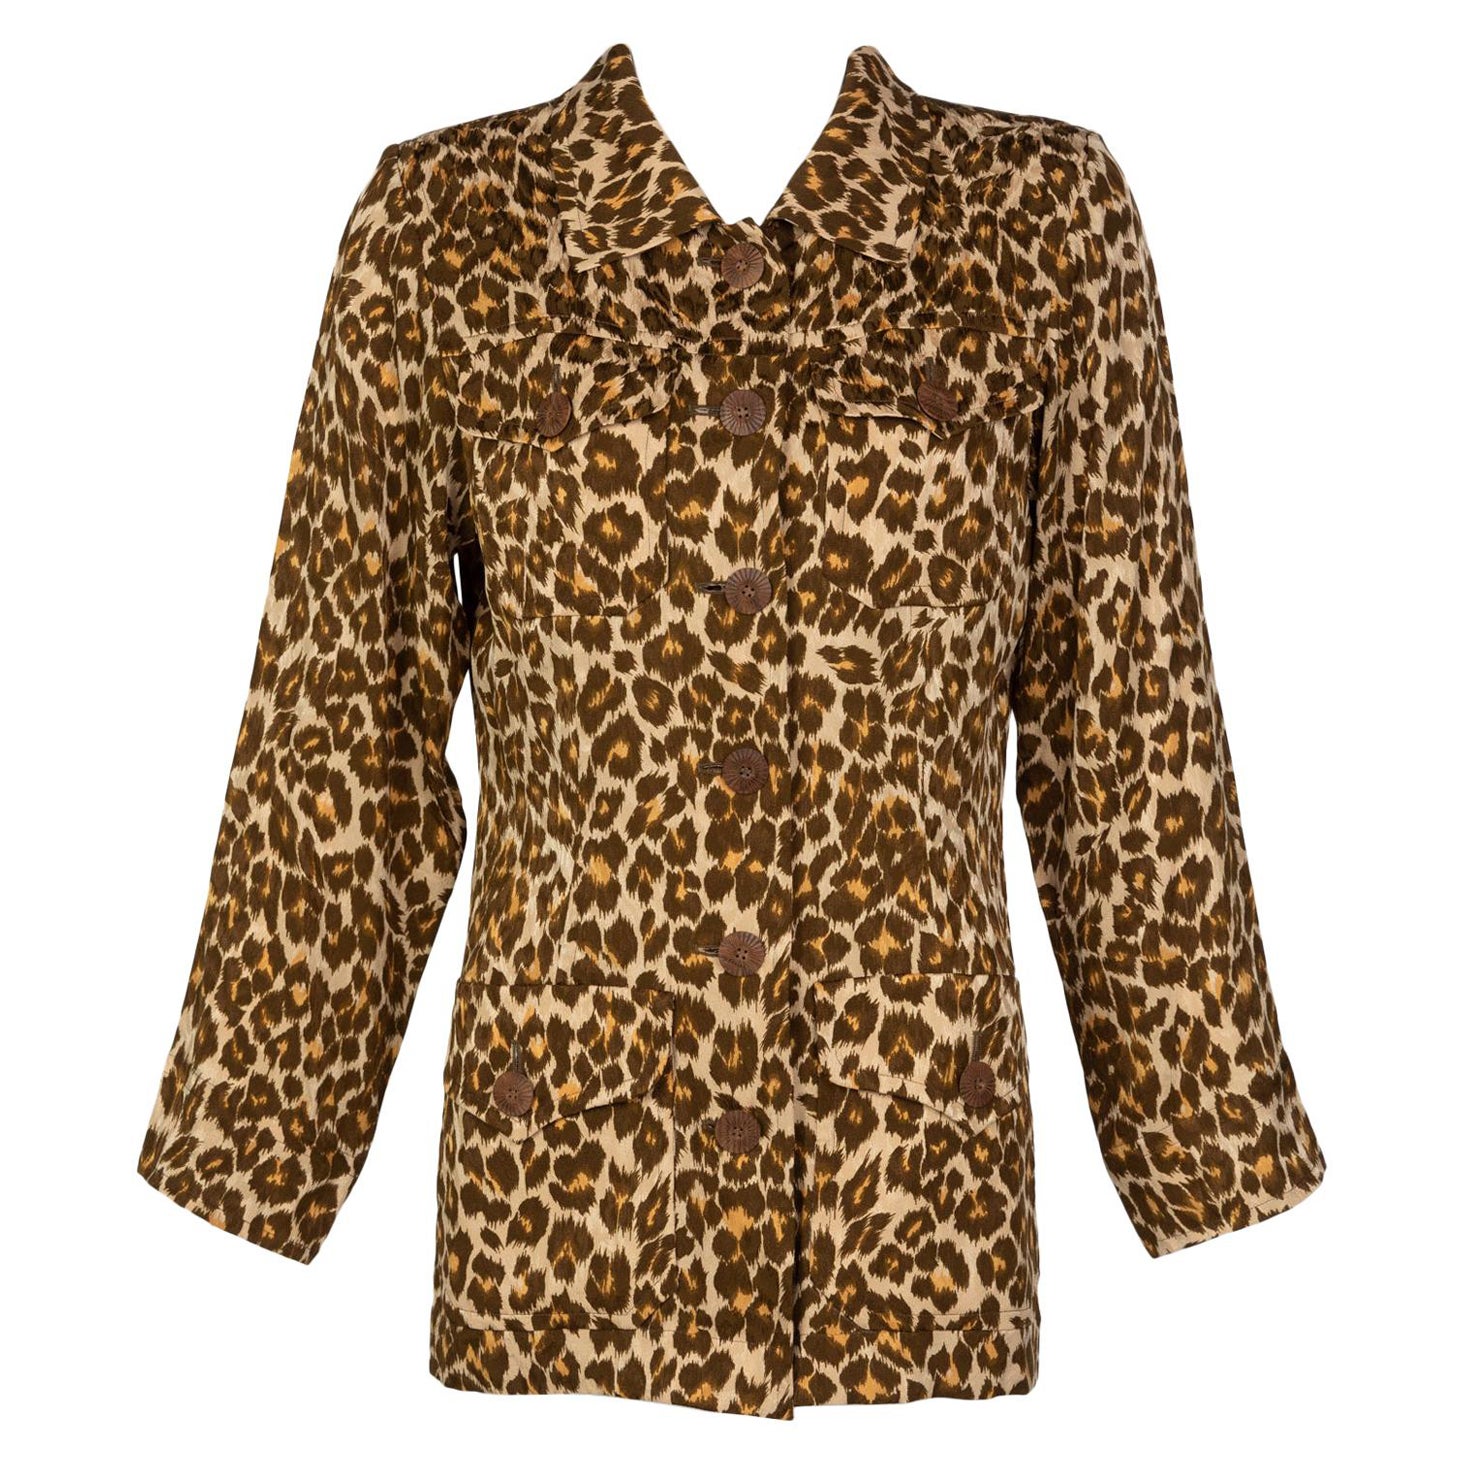 Yves Saint Laurent Leopard Silk Safari Top